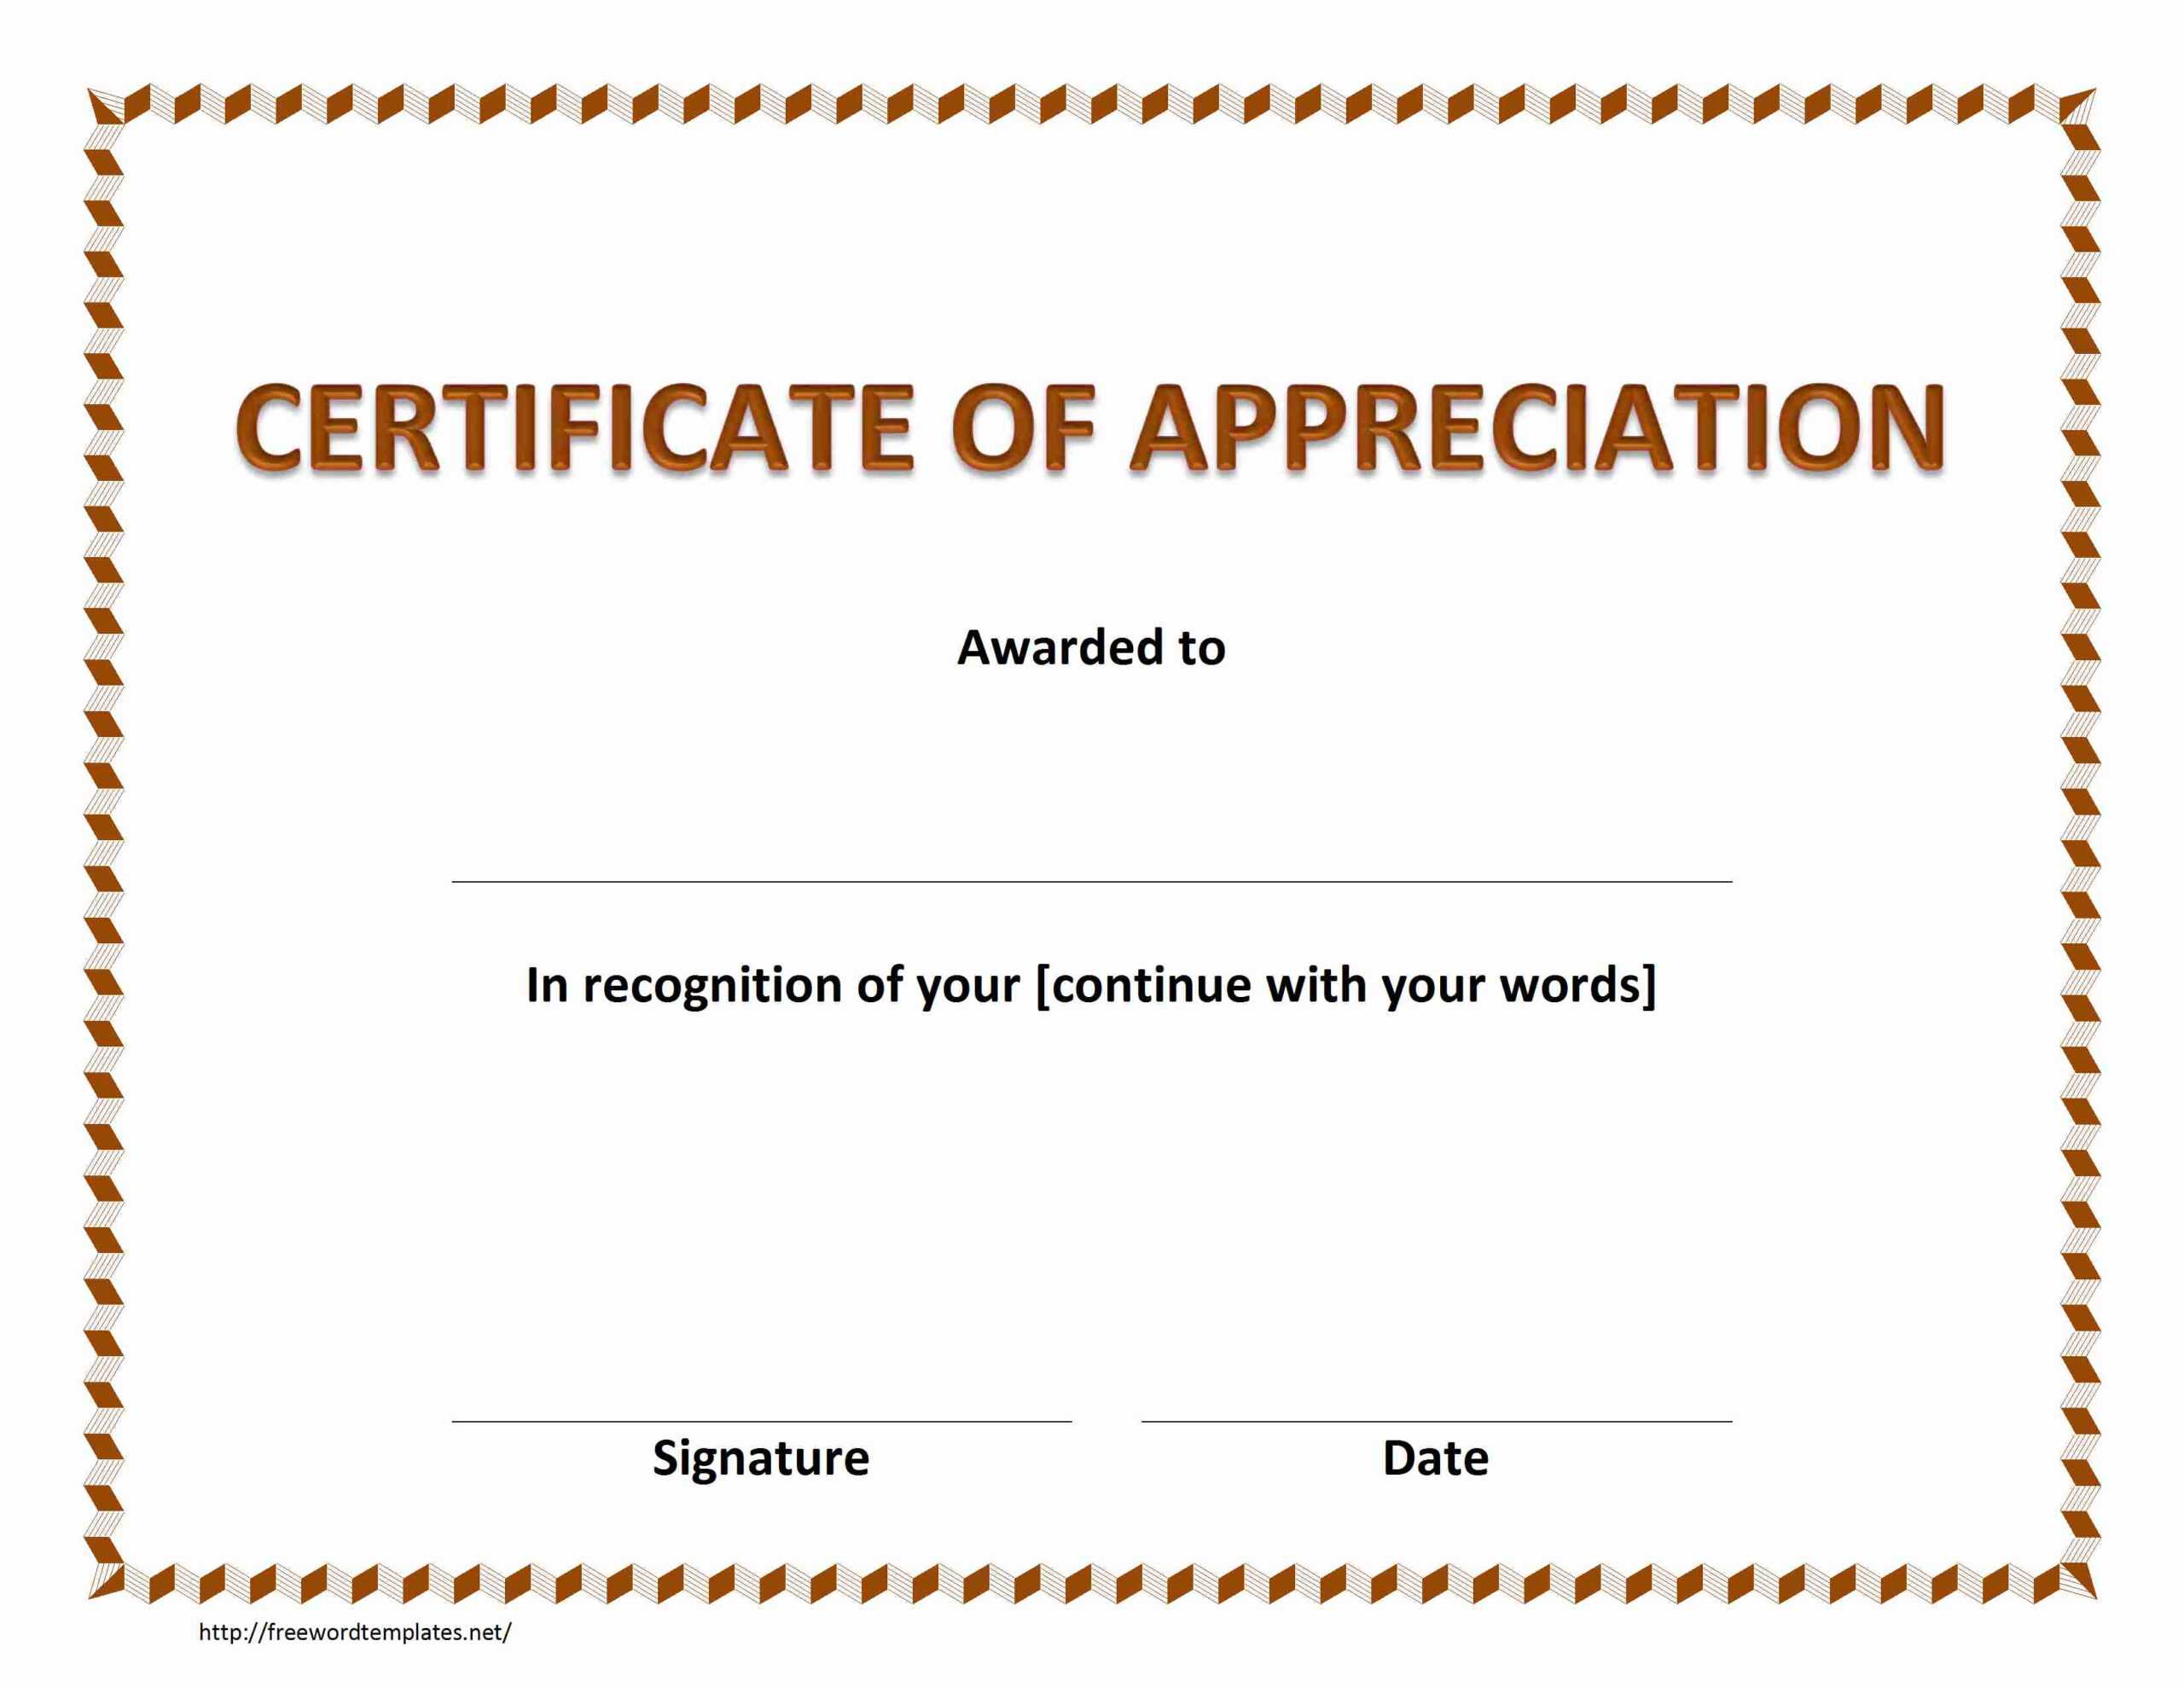 Certificate Of Appreciation Docs For Certificate Of Appreciation Template Doc